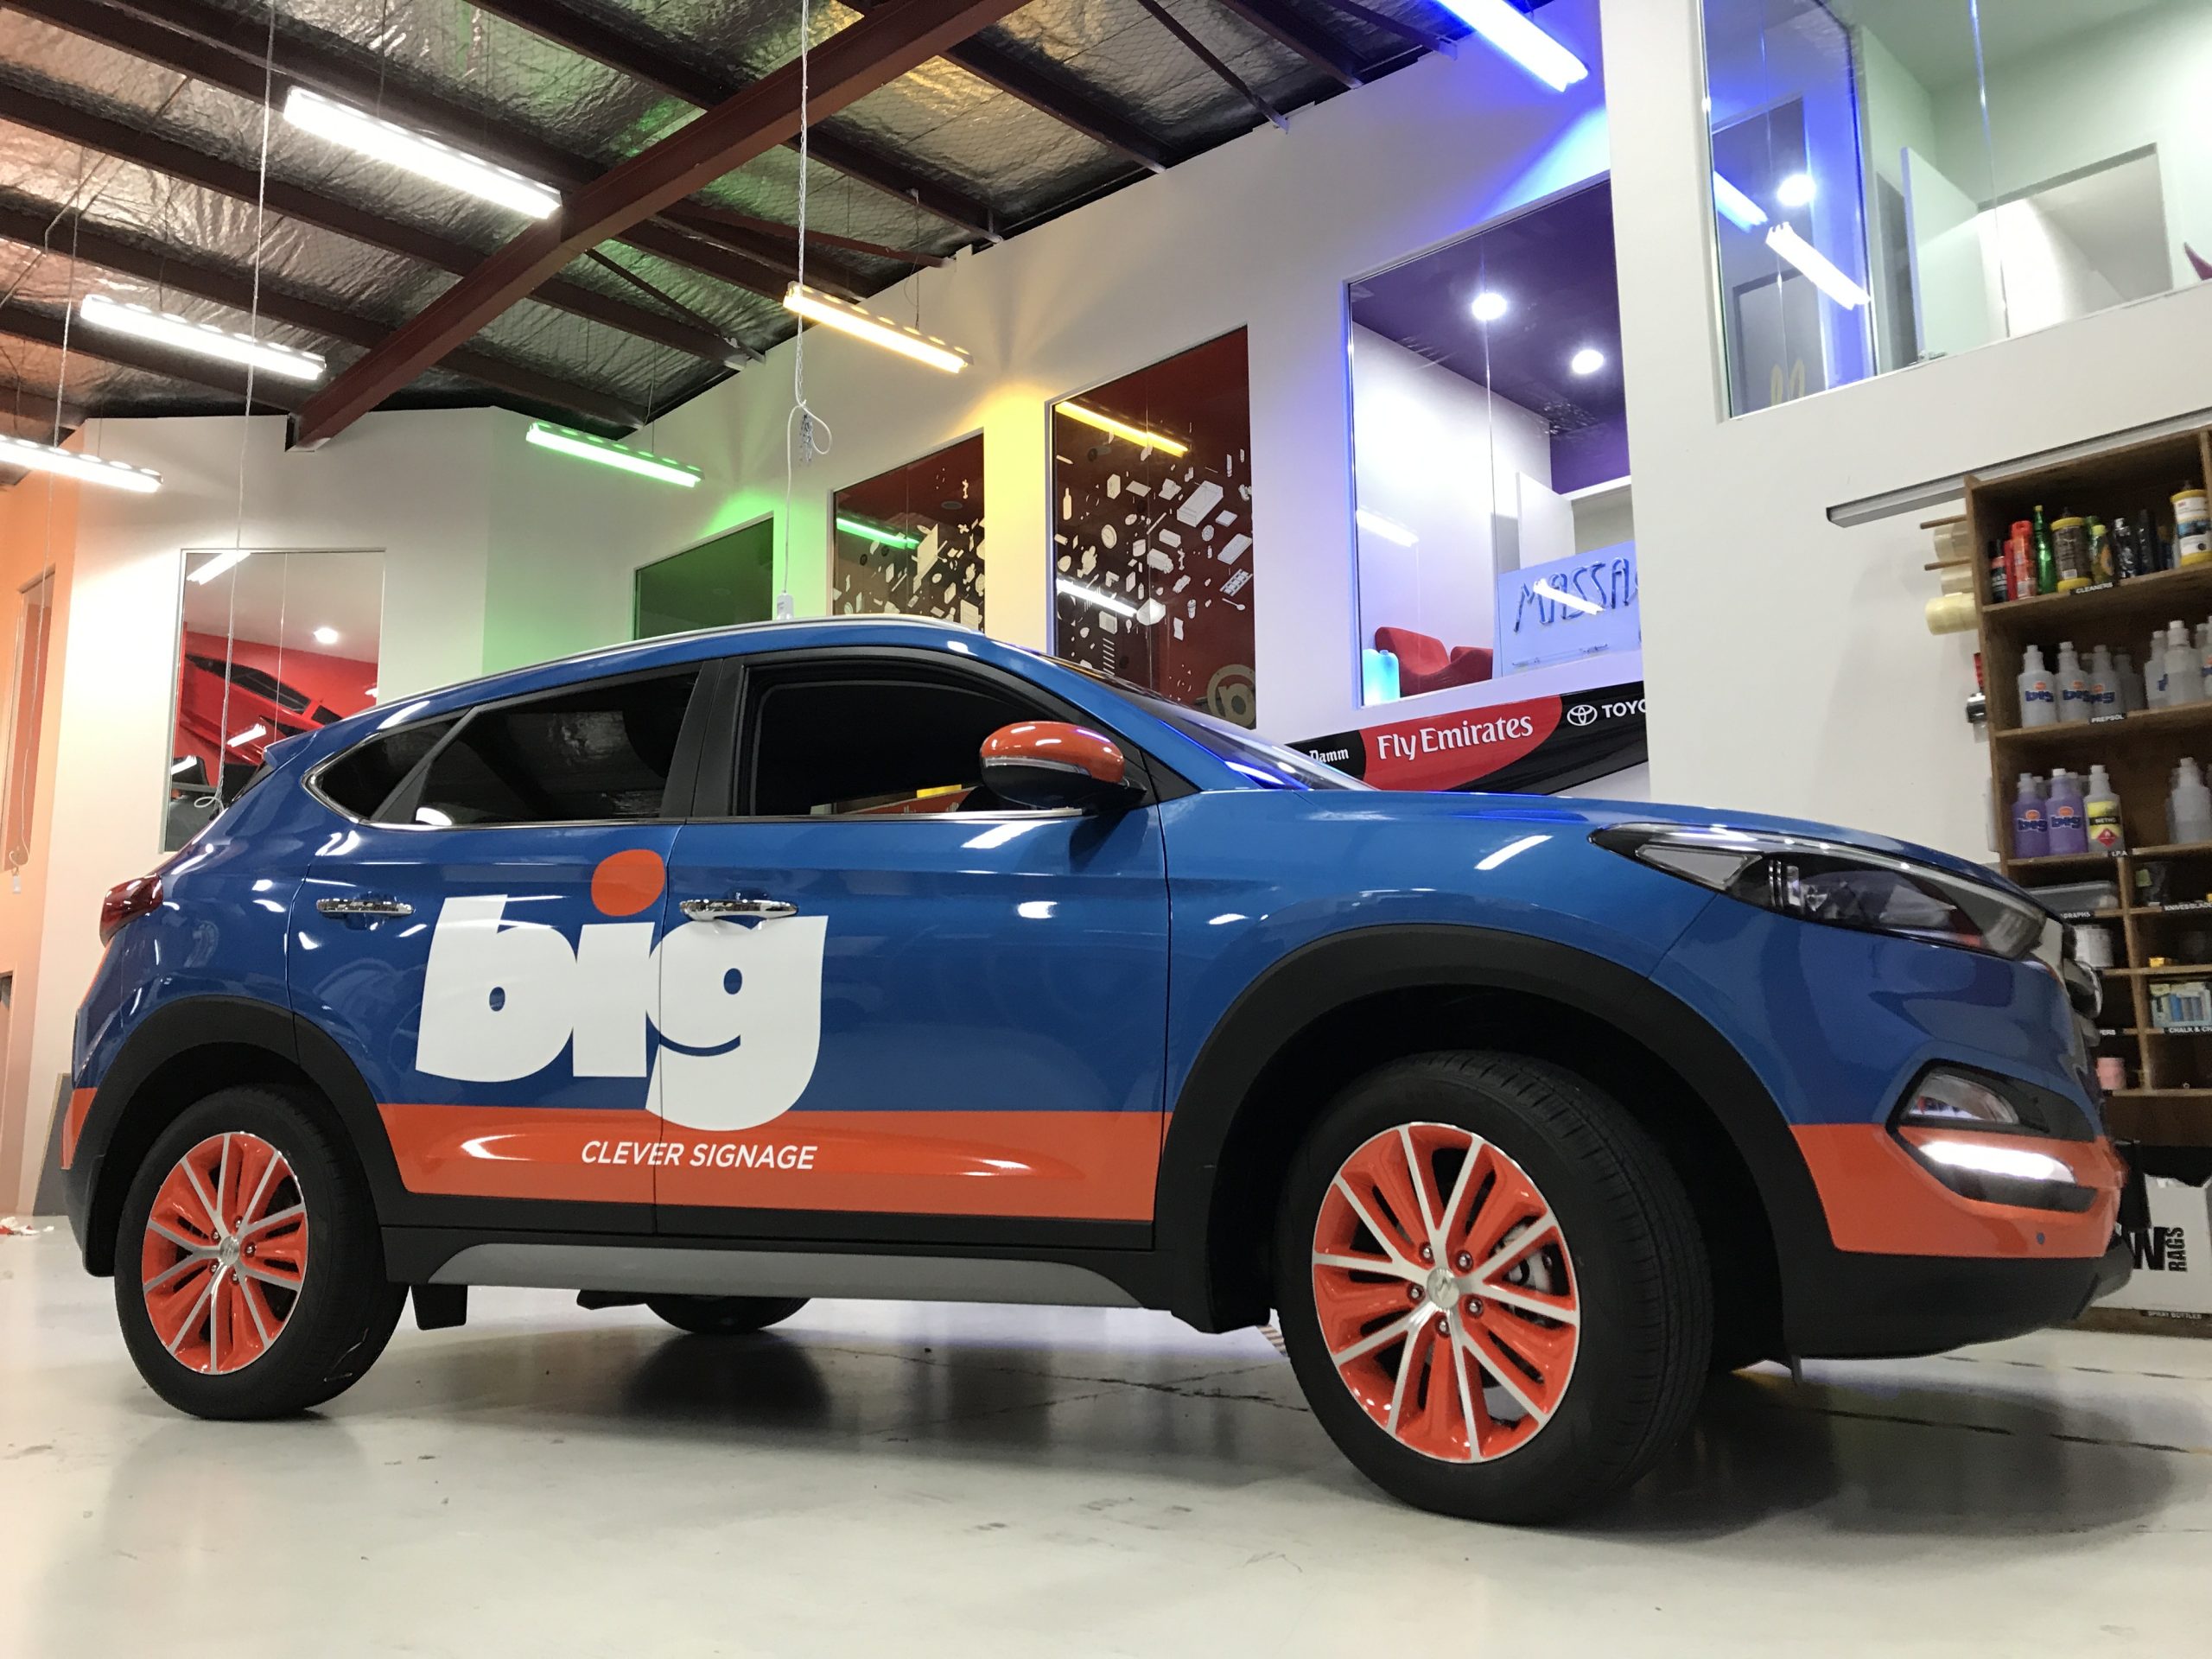 BIG Ideas signwritten Mazda SUV, with blue and orange wrap